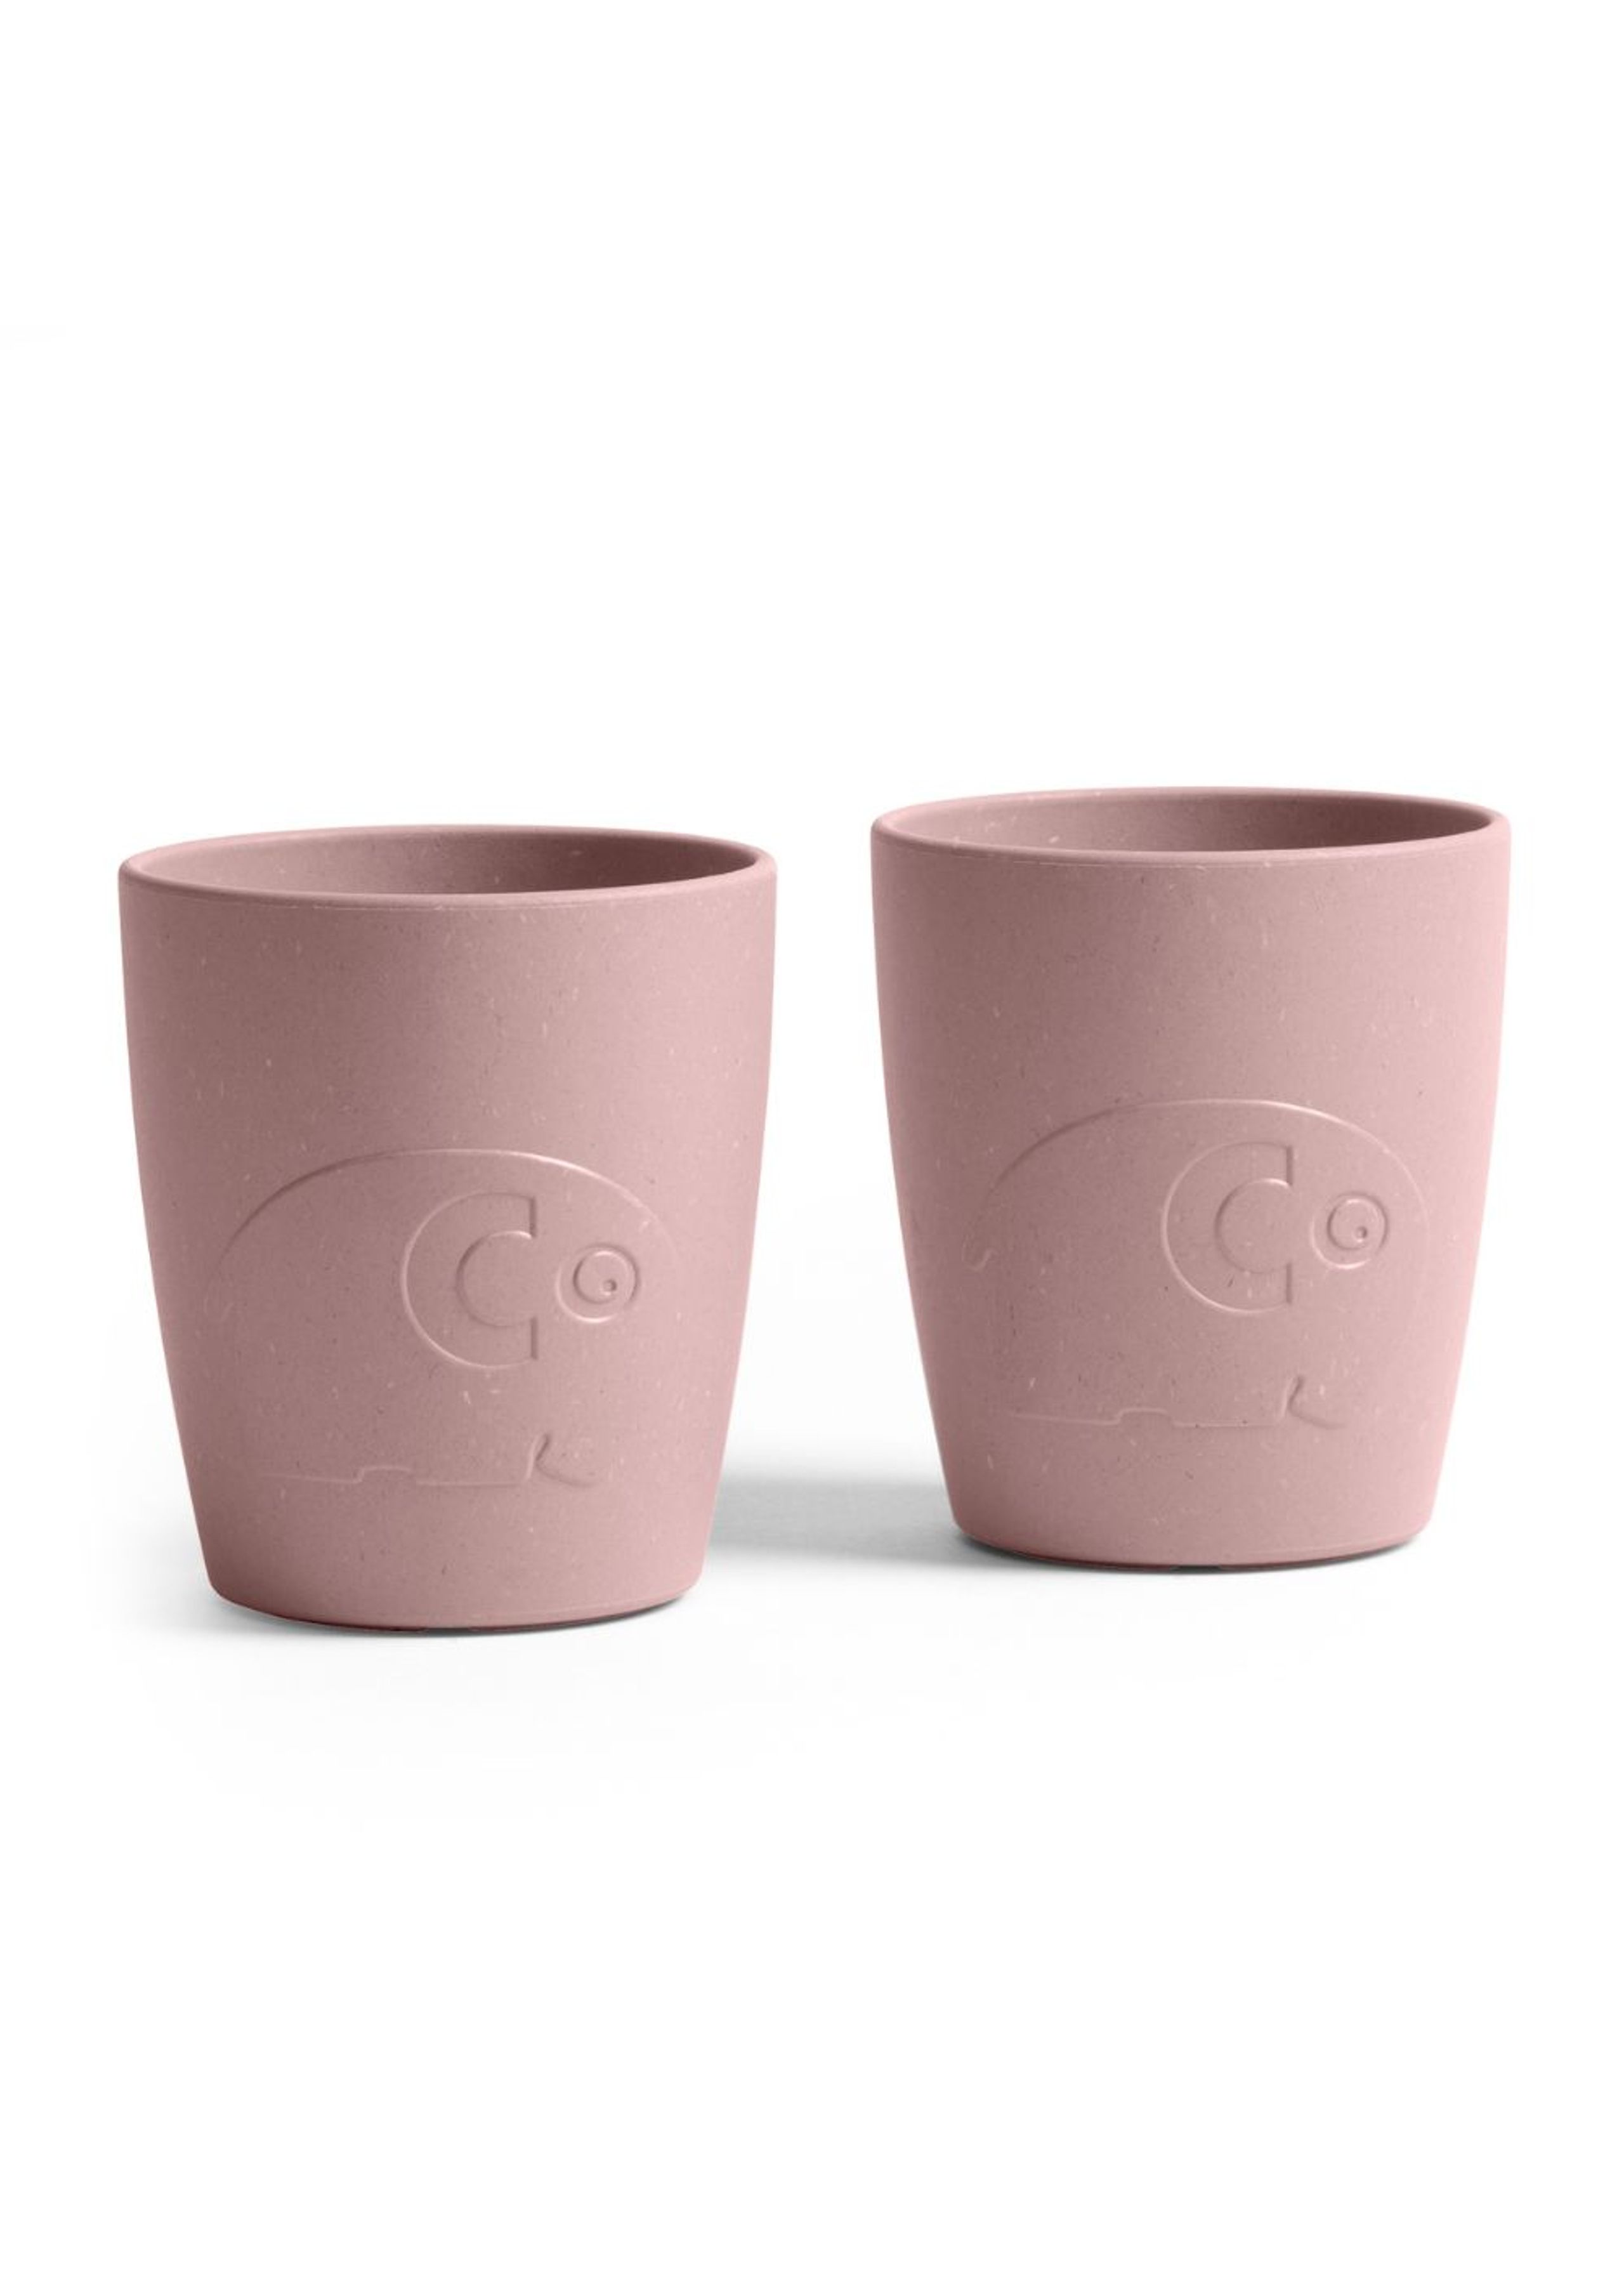 Sebra - Kop - MUMS - Cups - Blossom Pink - Set of 2